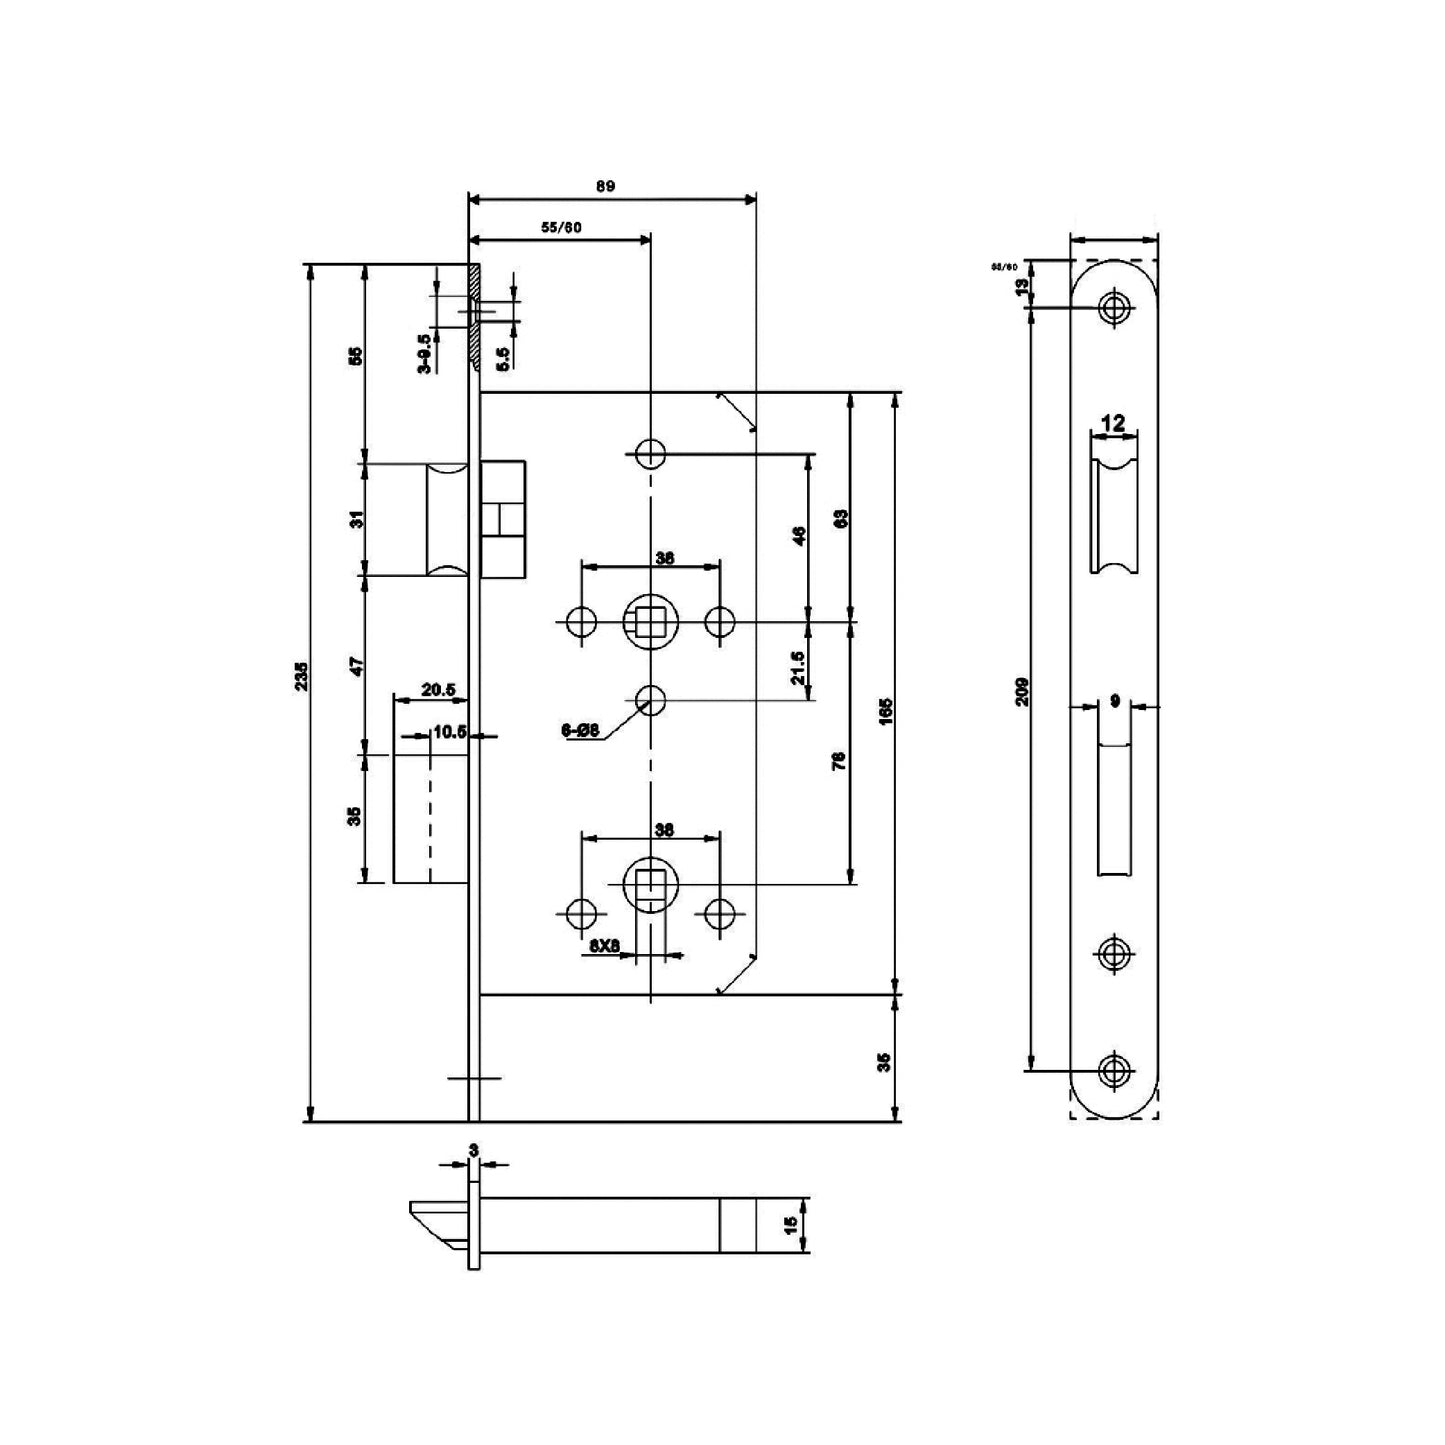 Euroart DIN Bathroom Lock Body, 55mm Backset,78mm Centres ,Finish SSS,BL/PVD,316/BL/PVD- DLA7855WC